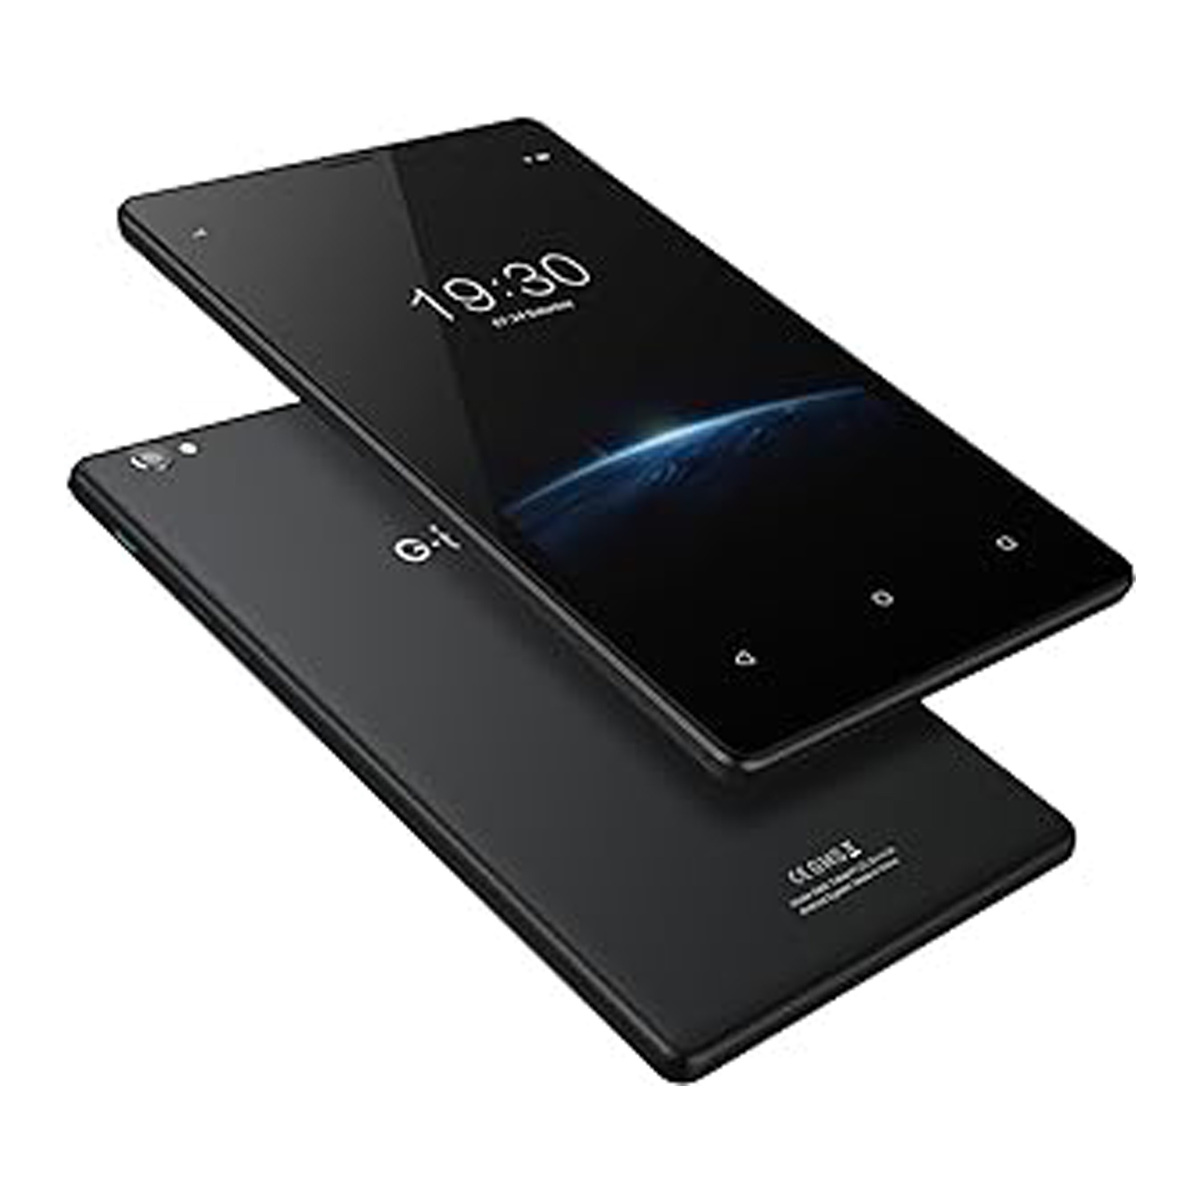 Gtab S8X 4G Tablet, 8 inches Display, 3 GB RAM, 32 GB STORAGE, Black